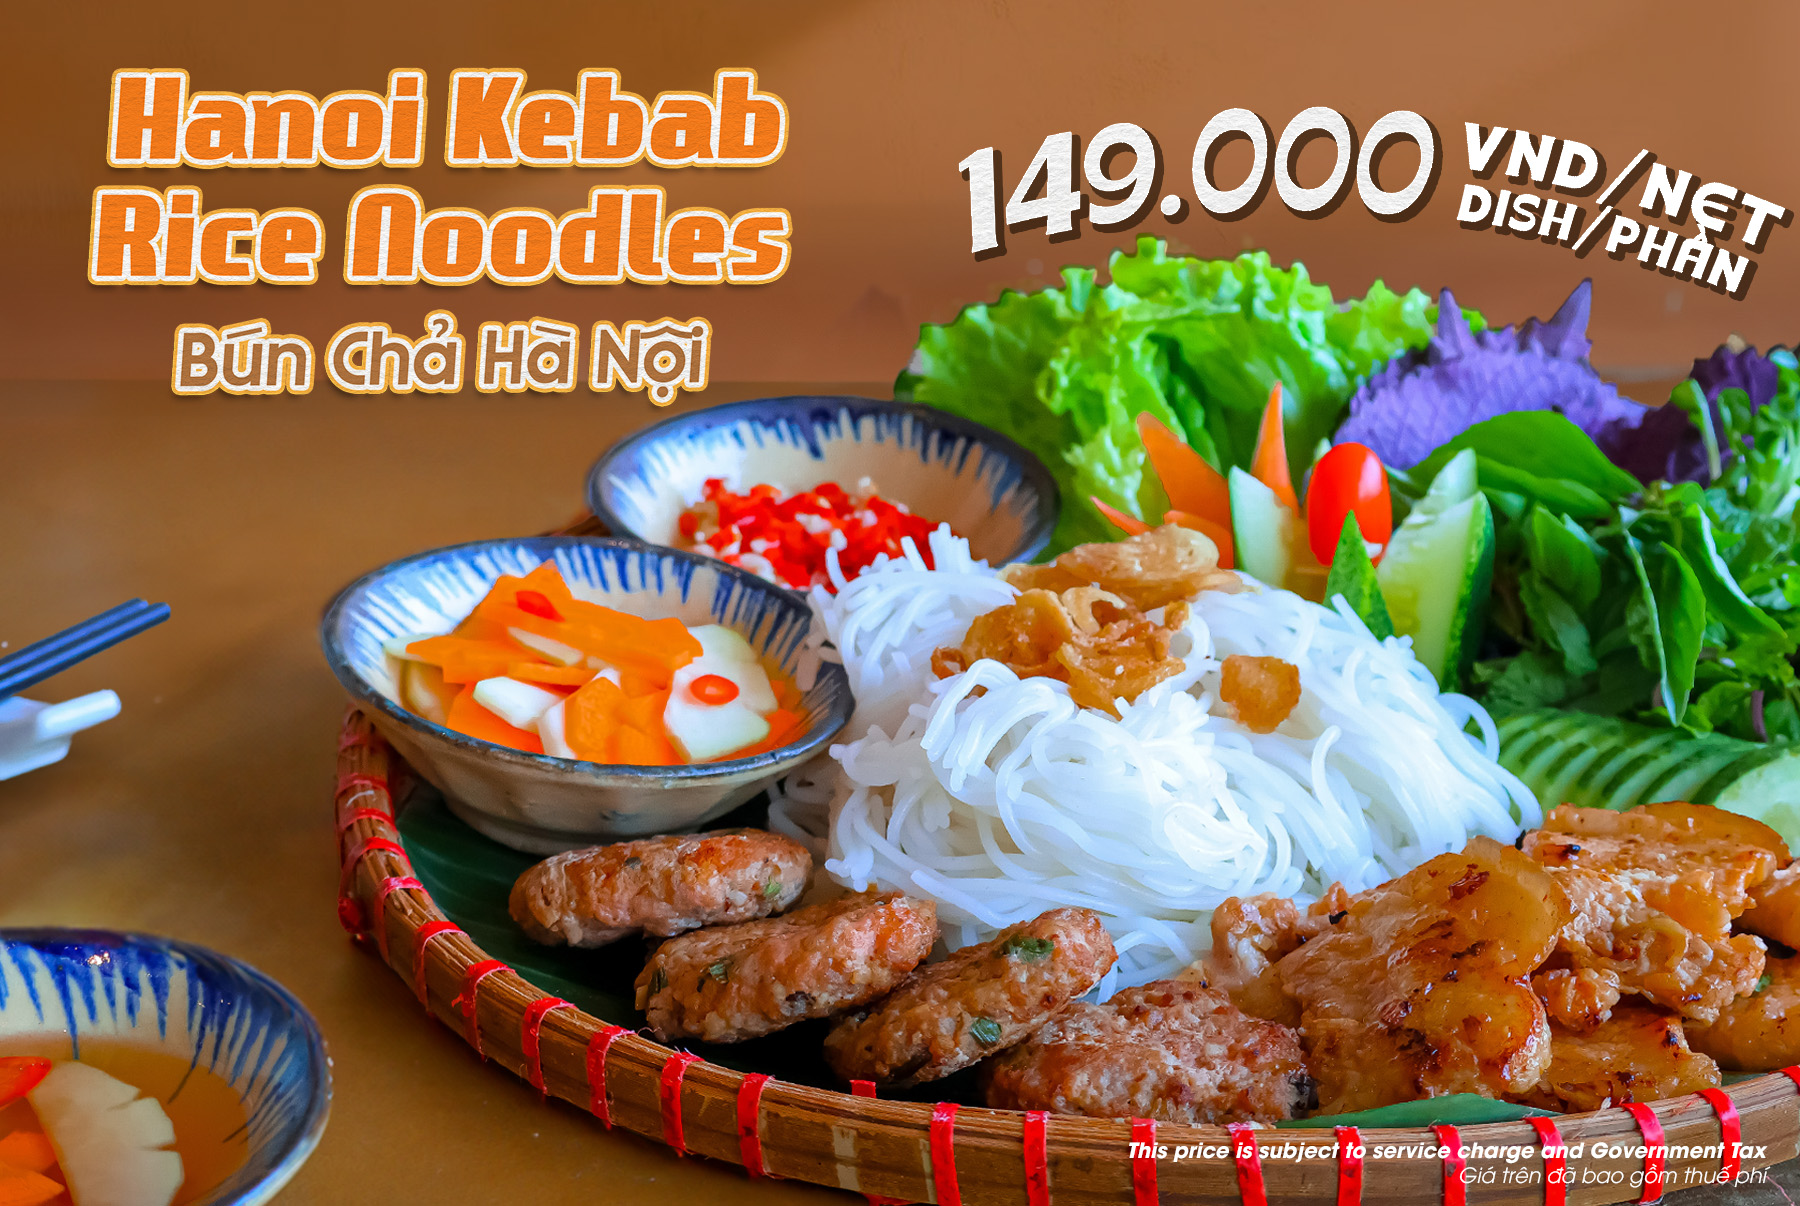 Hanoi Kebab Rice Noodles